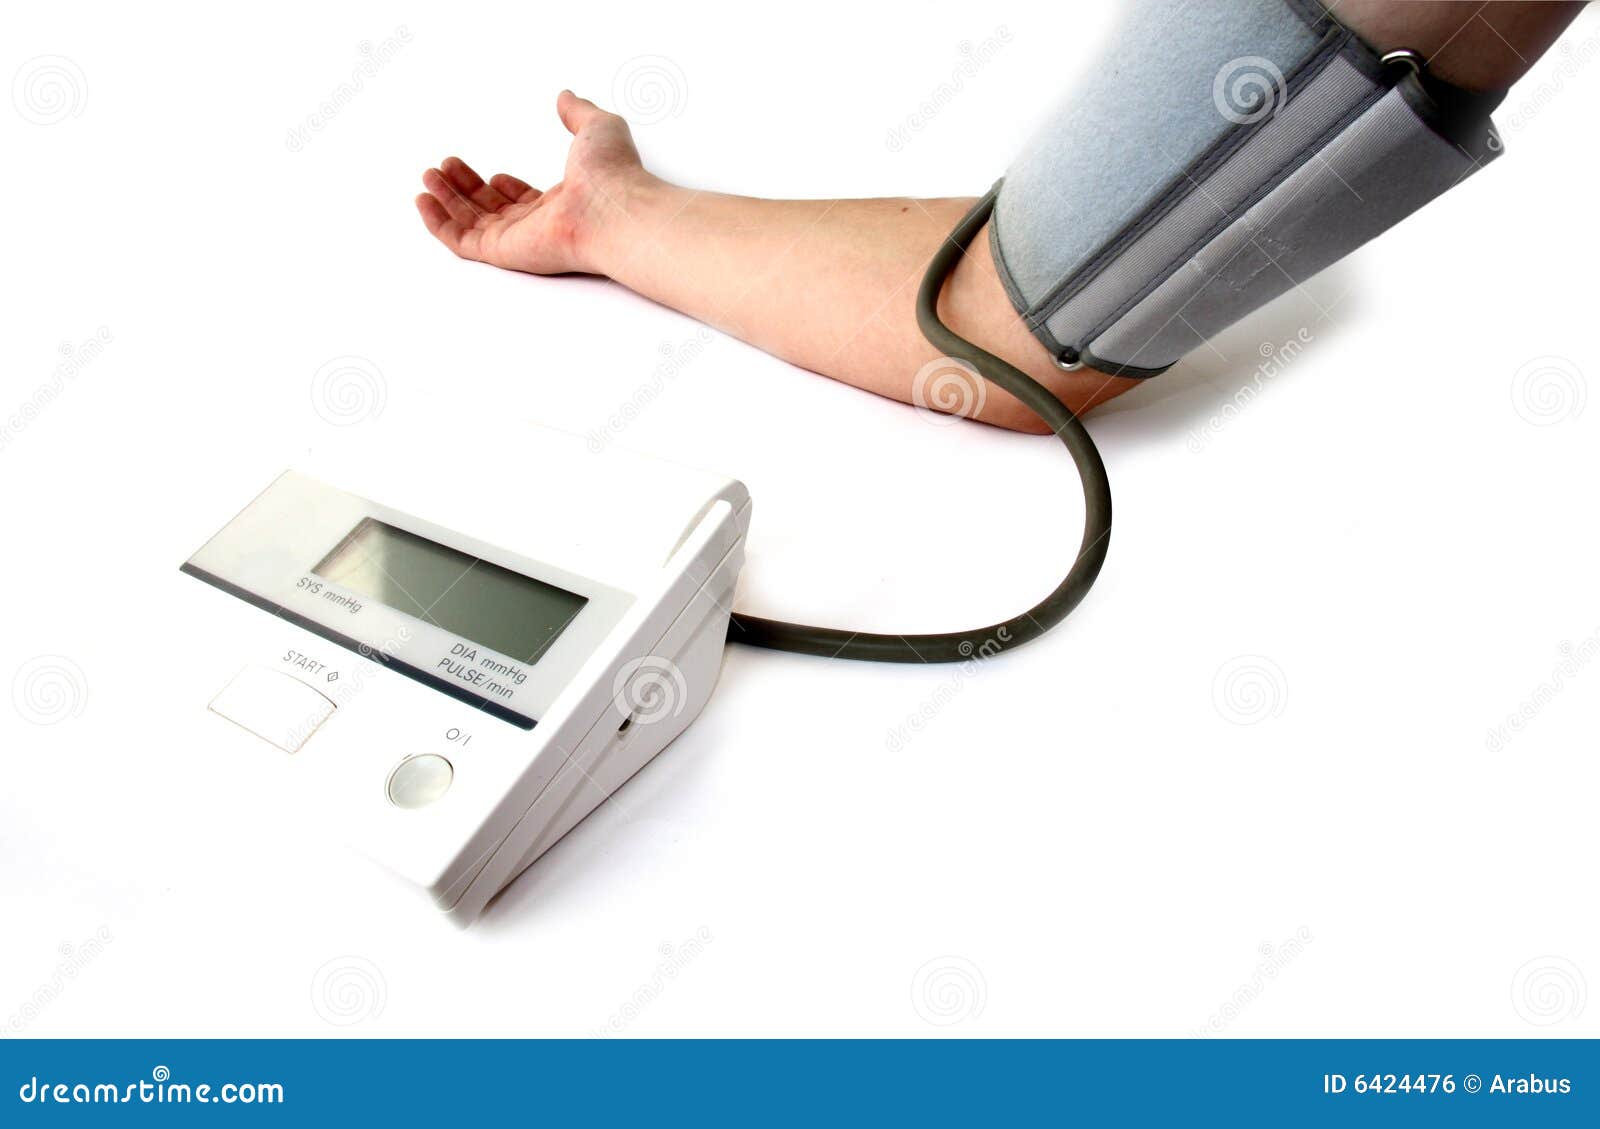 free clipart of blood pressure cuff - photo #49